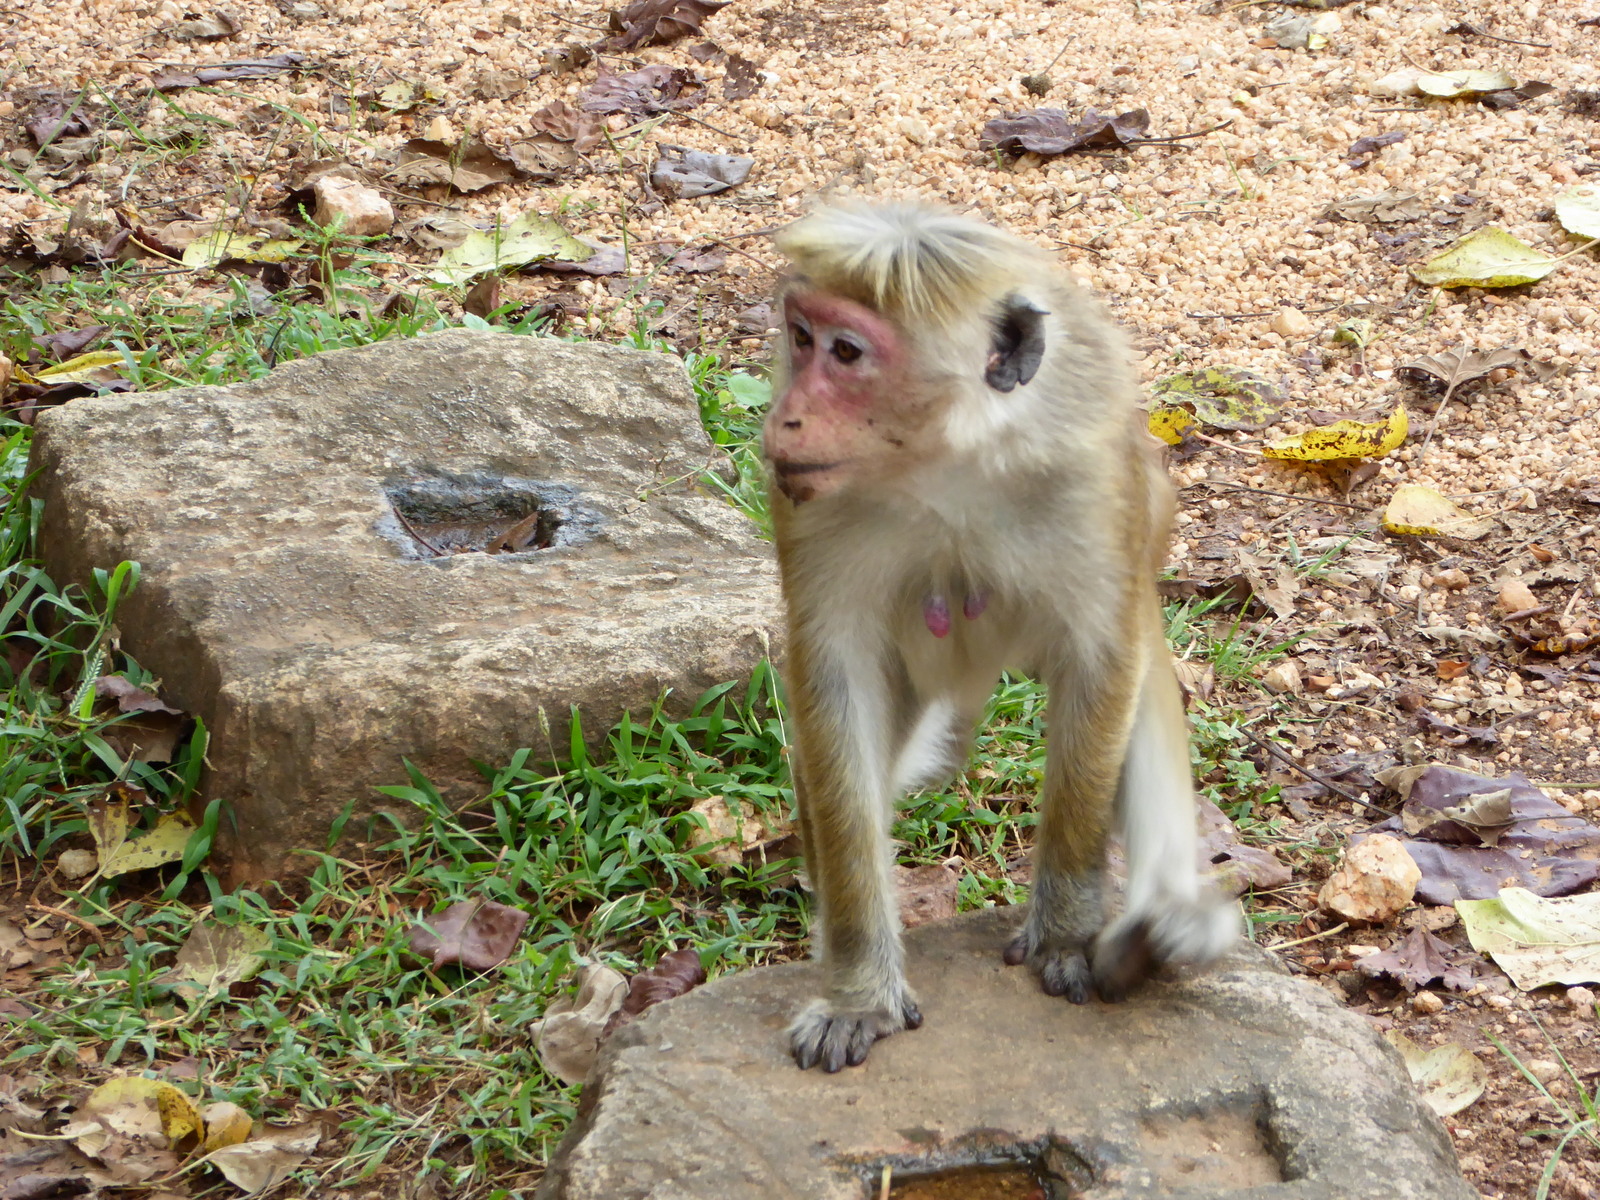 Monkey, Polonnaruwa